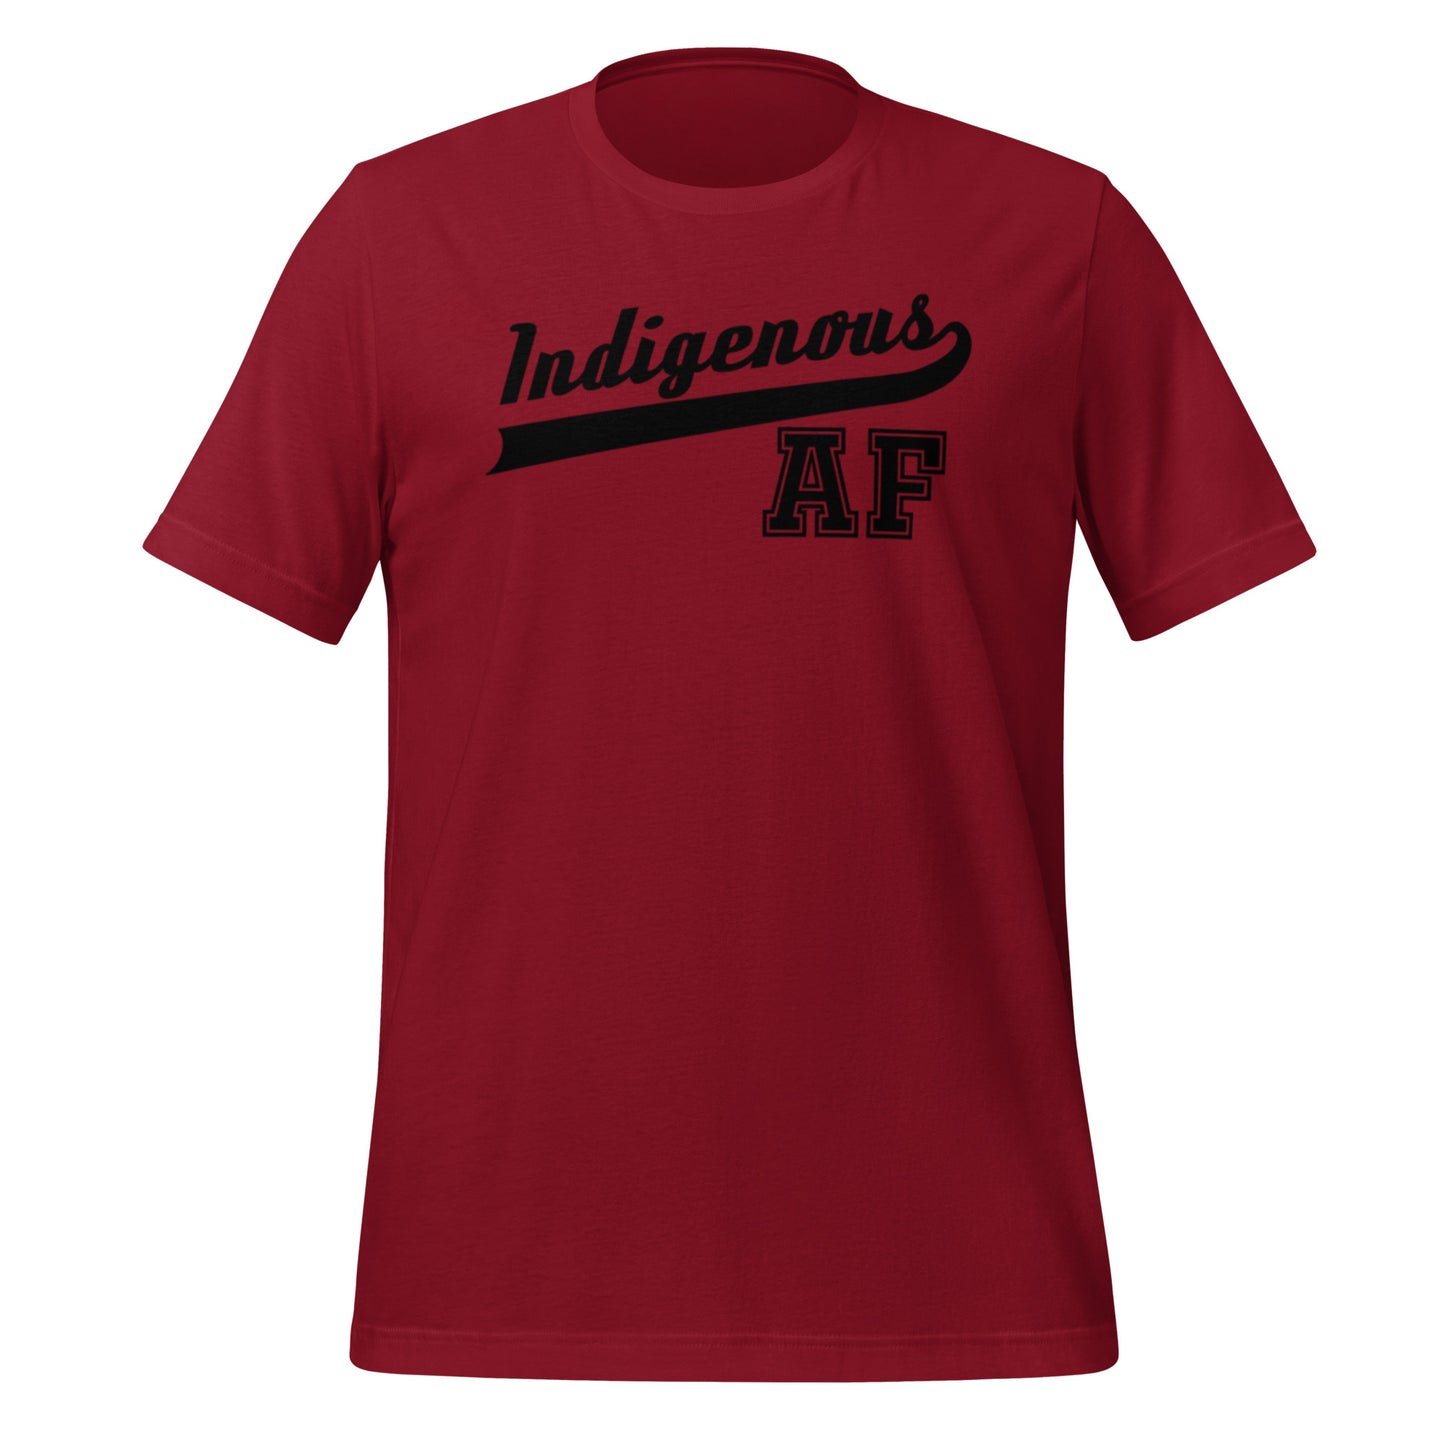 Indigenous AF Unisex t-shirt (SM-4XL)